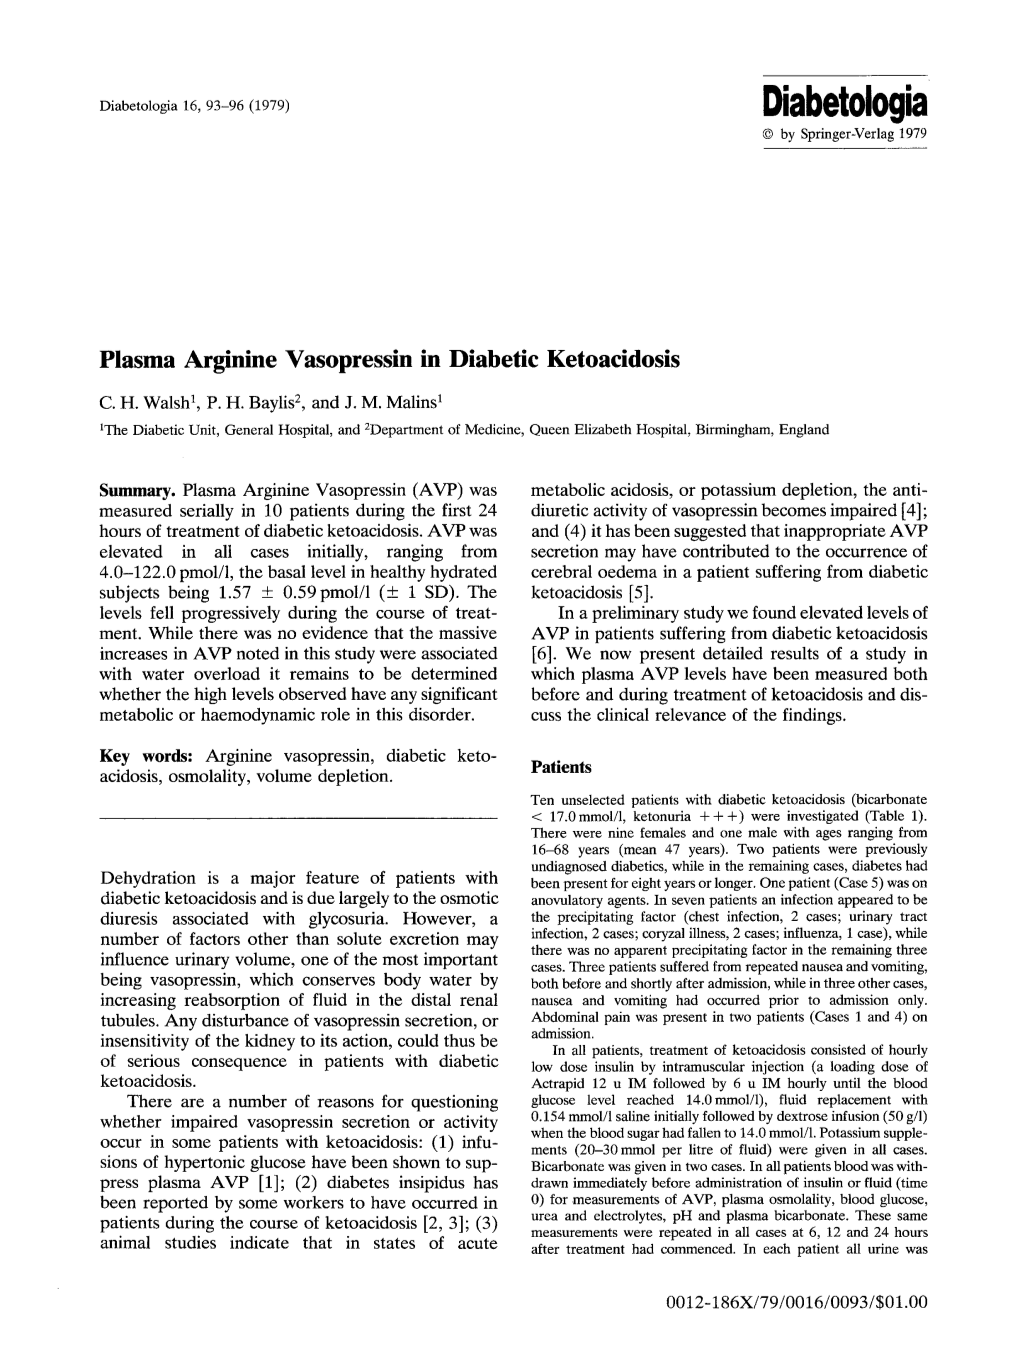 Plasma Arginine Vasopressin in Diabetic Ketoacidosis